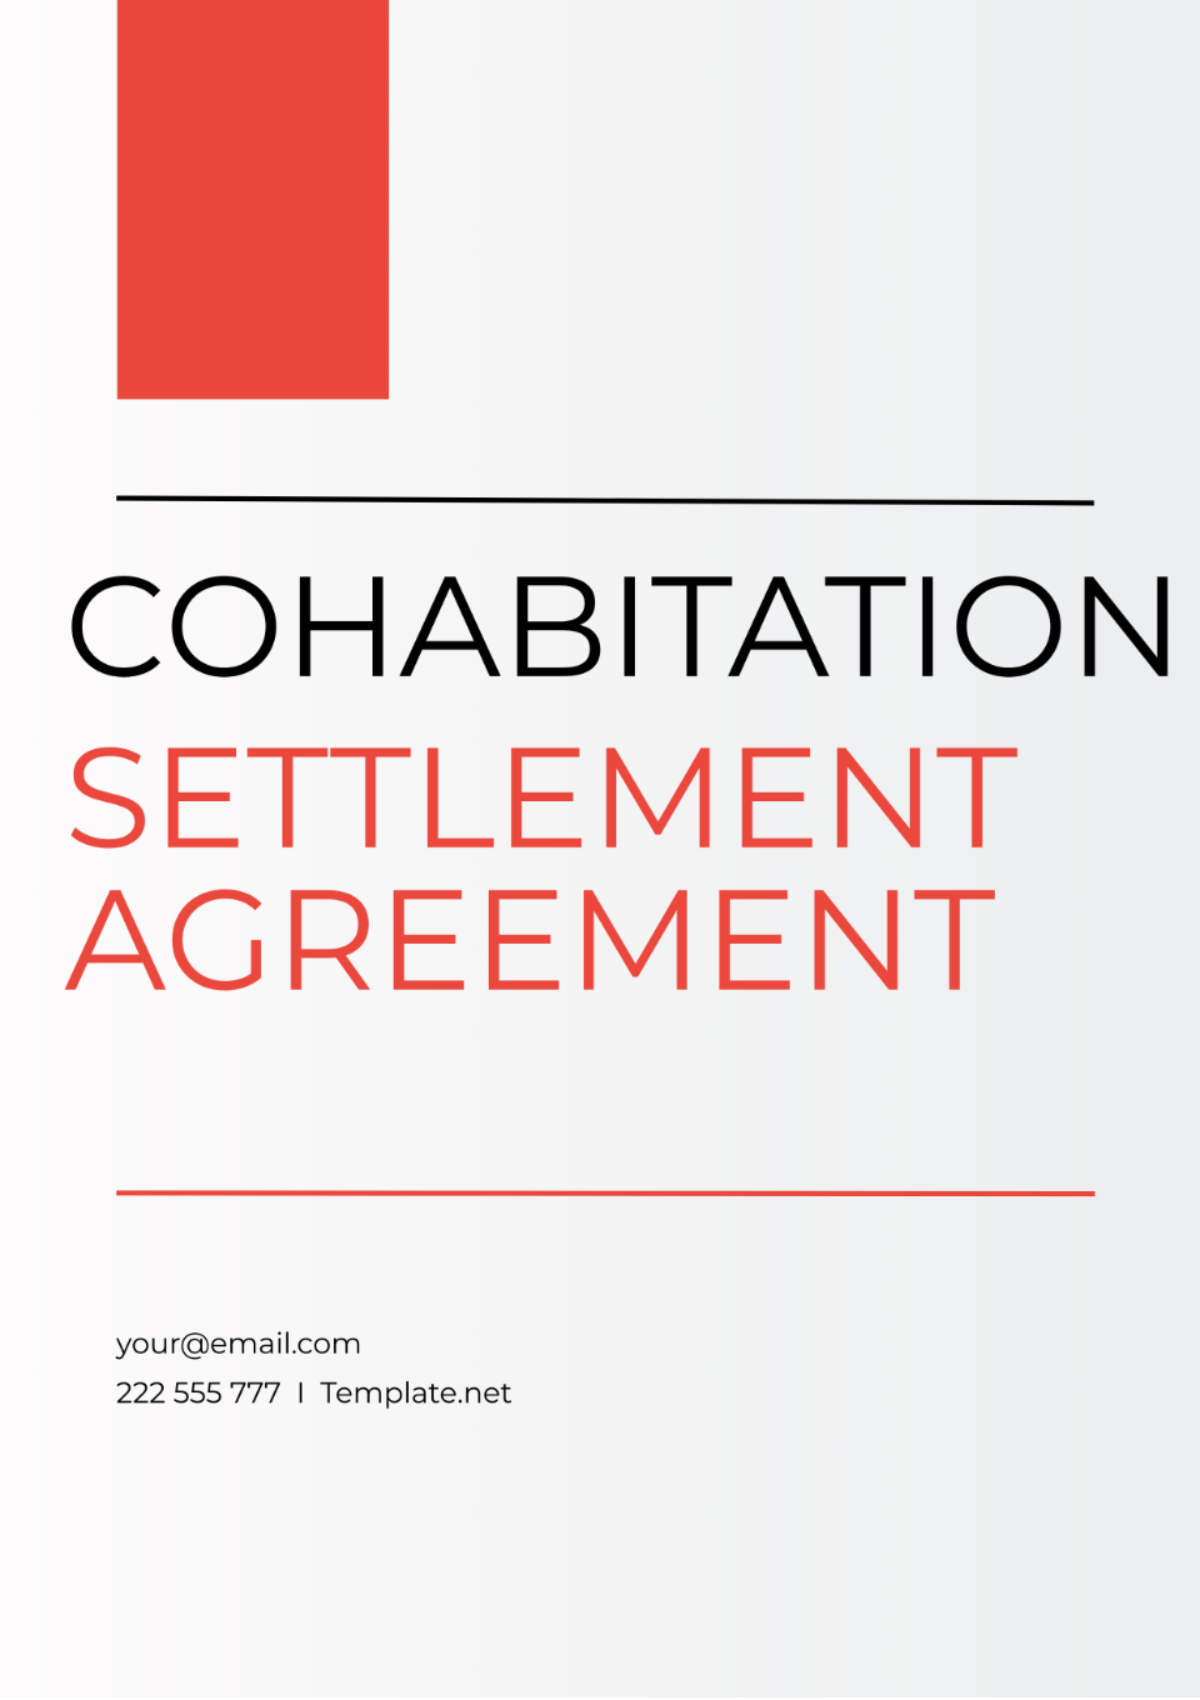 Free Cohabitation Settlement Agreement Template